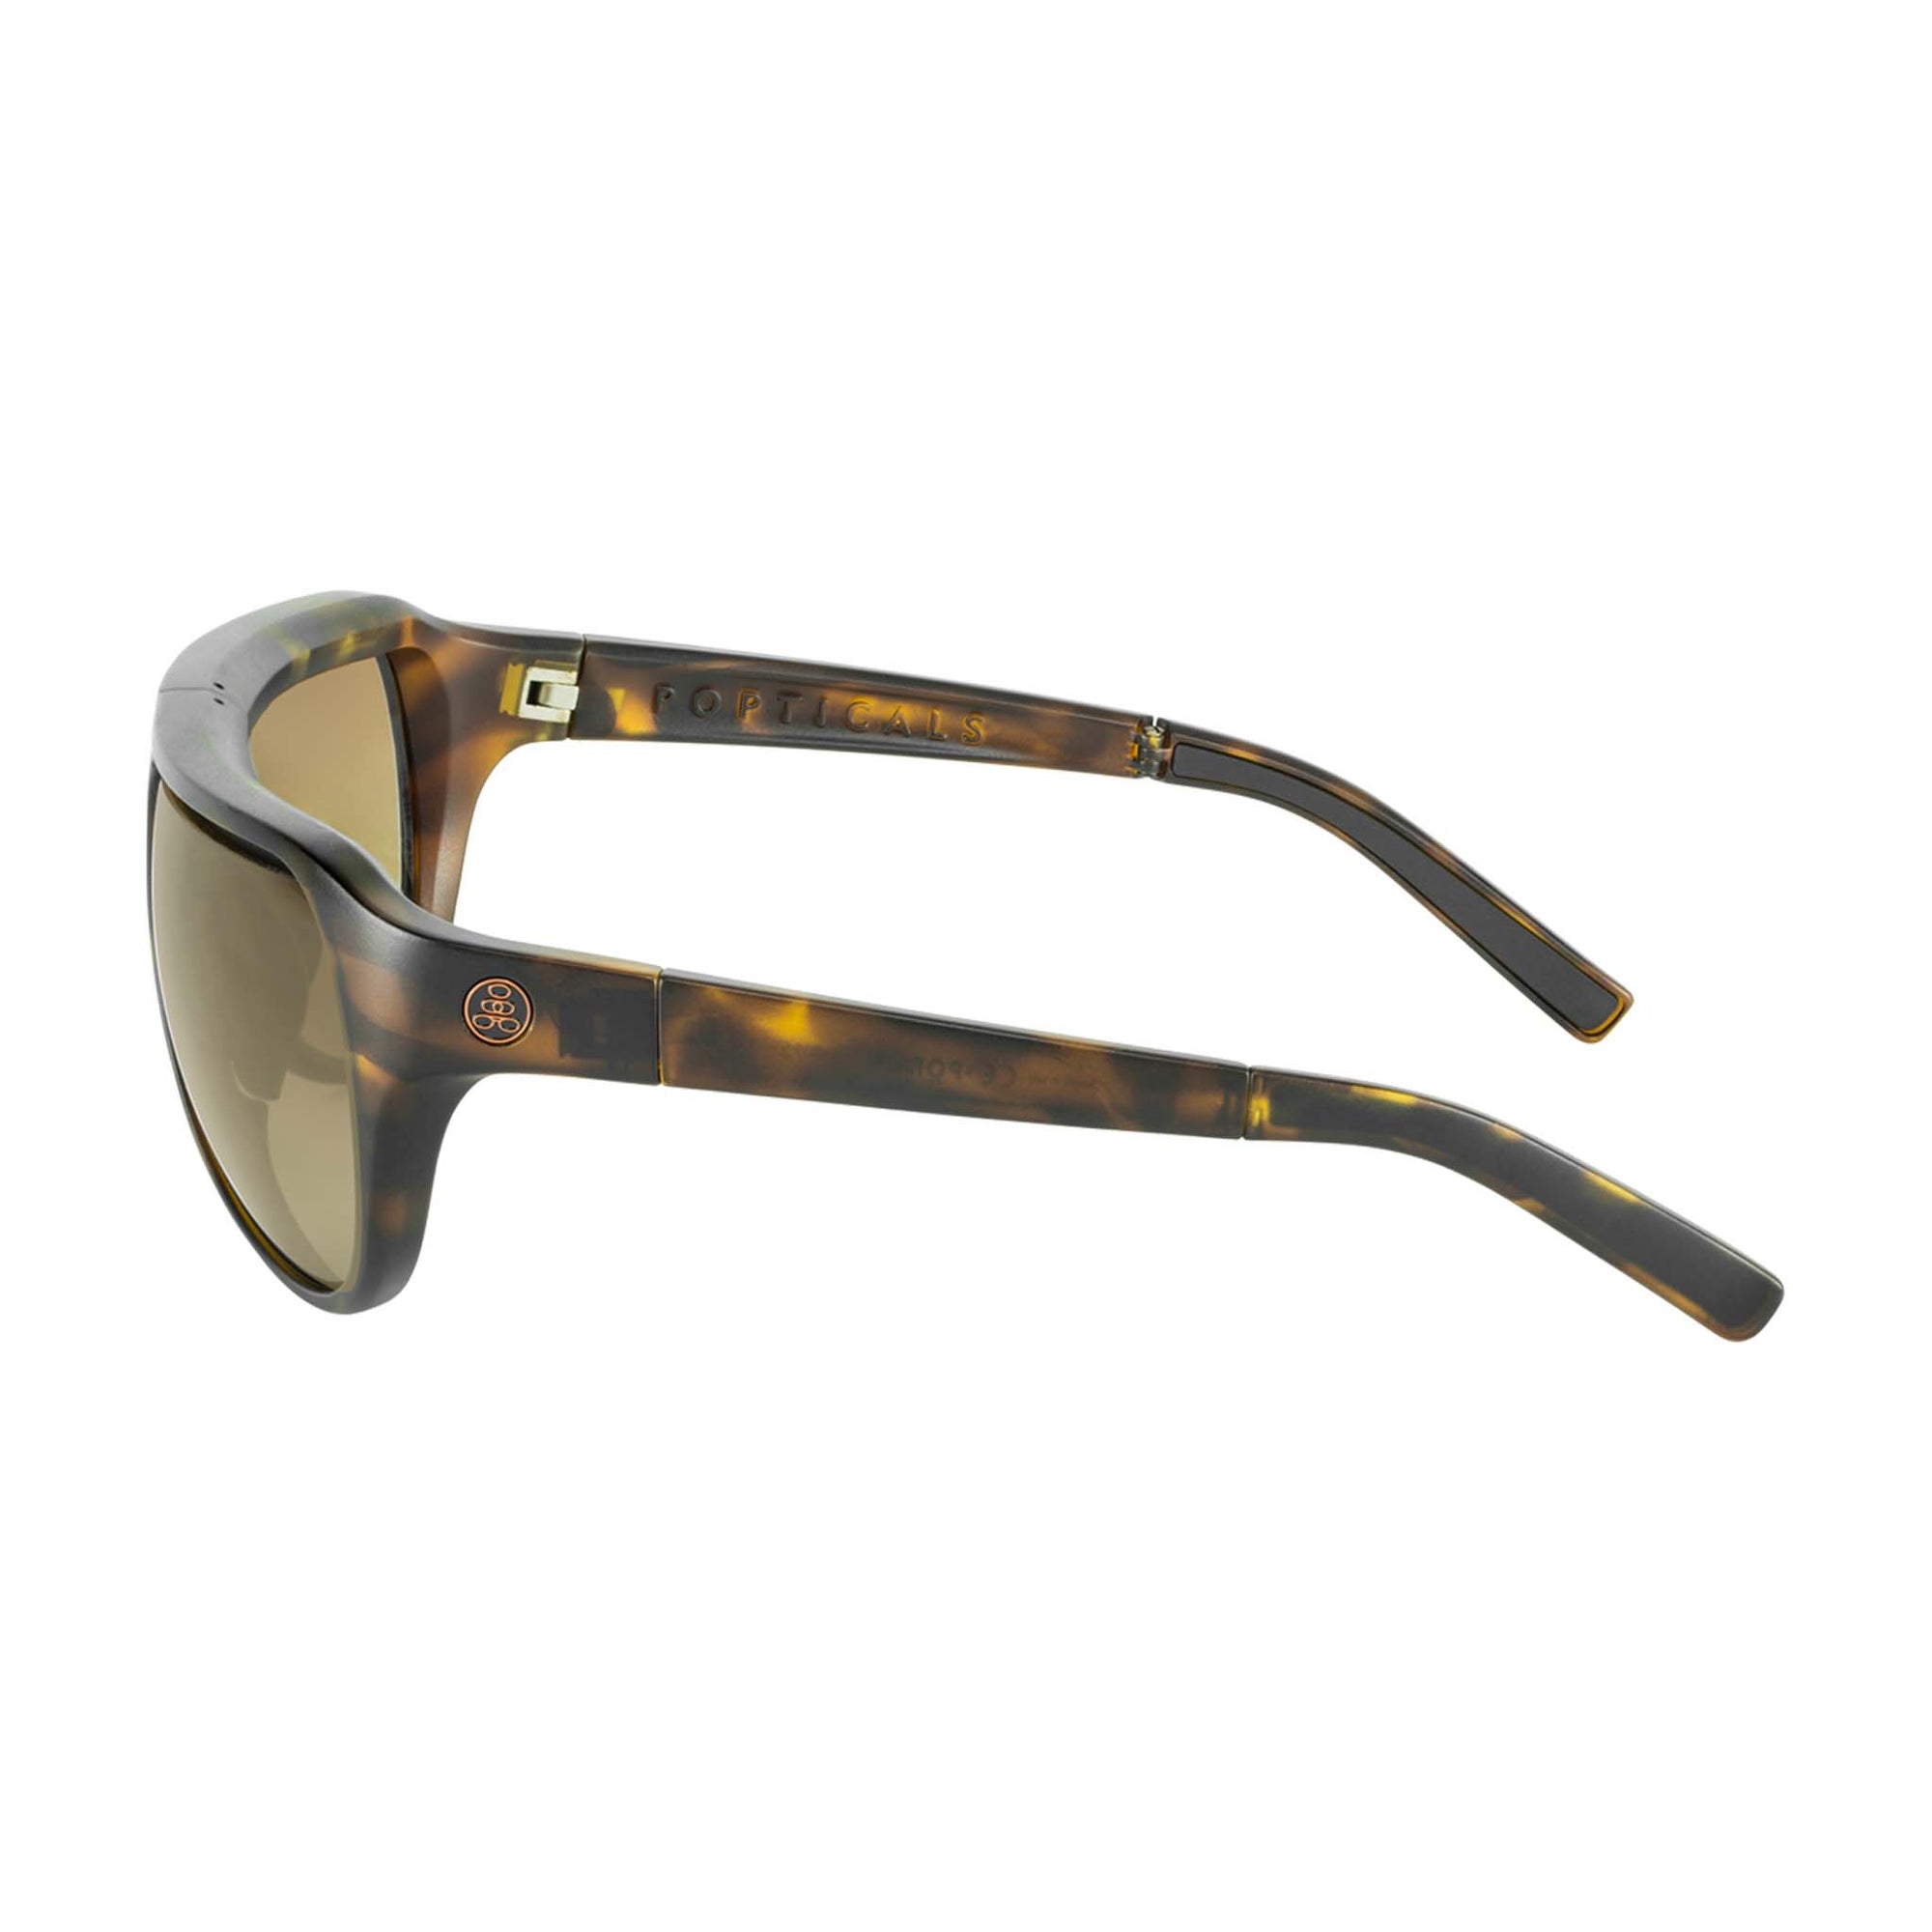 Popticals, Premium Compact Sunglasses, PopAir, 300010-CUNC, Polarized Sunglasses, Matte Tortoise Frame, Gradient Brown Lenses, Side View